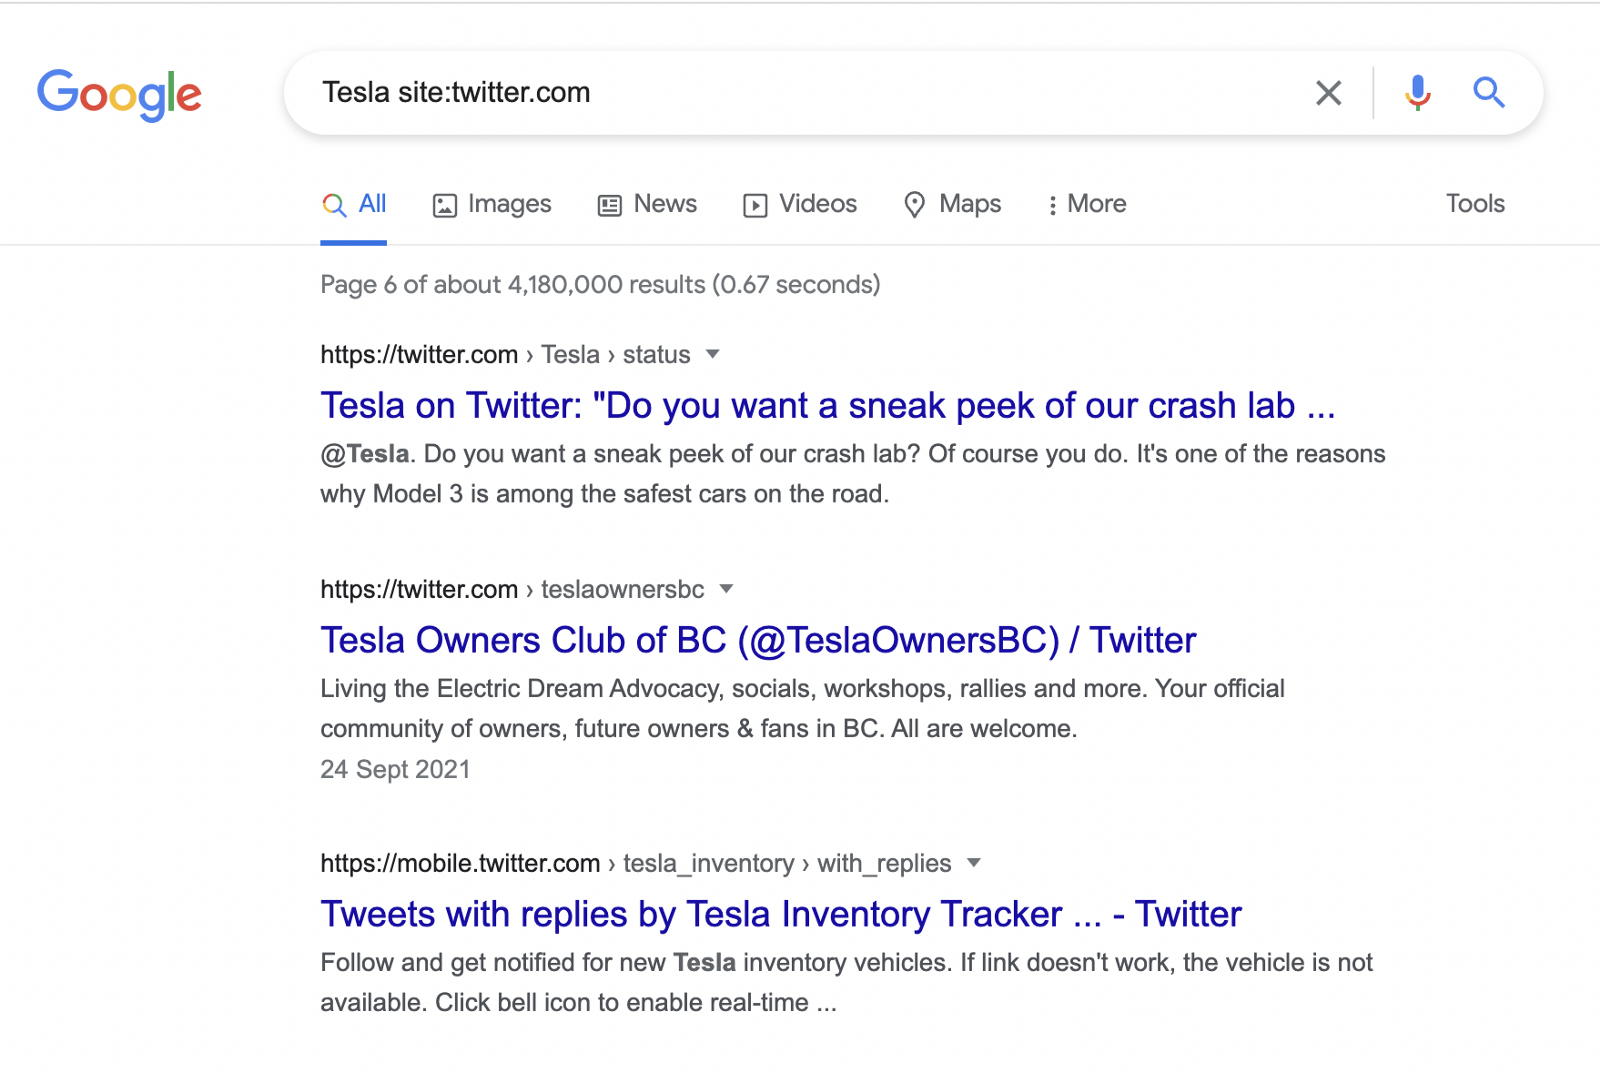 "Tesla" on Twitter